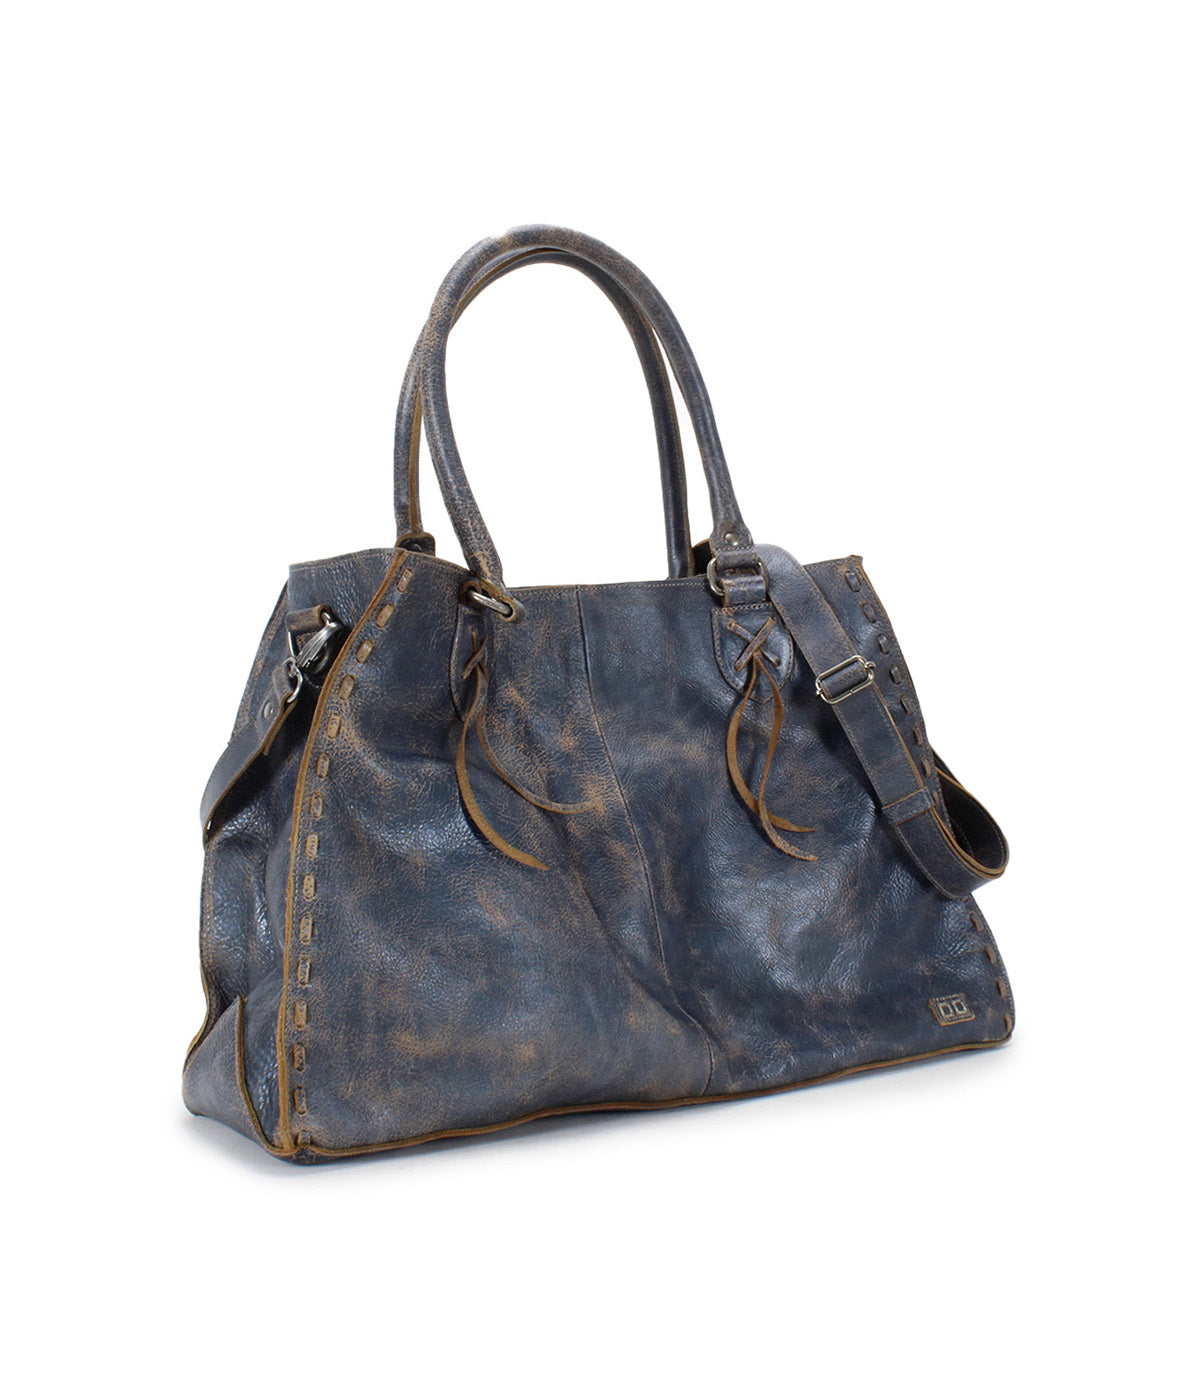 A Rockaway handbag with brown handles from Bed Stu.